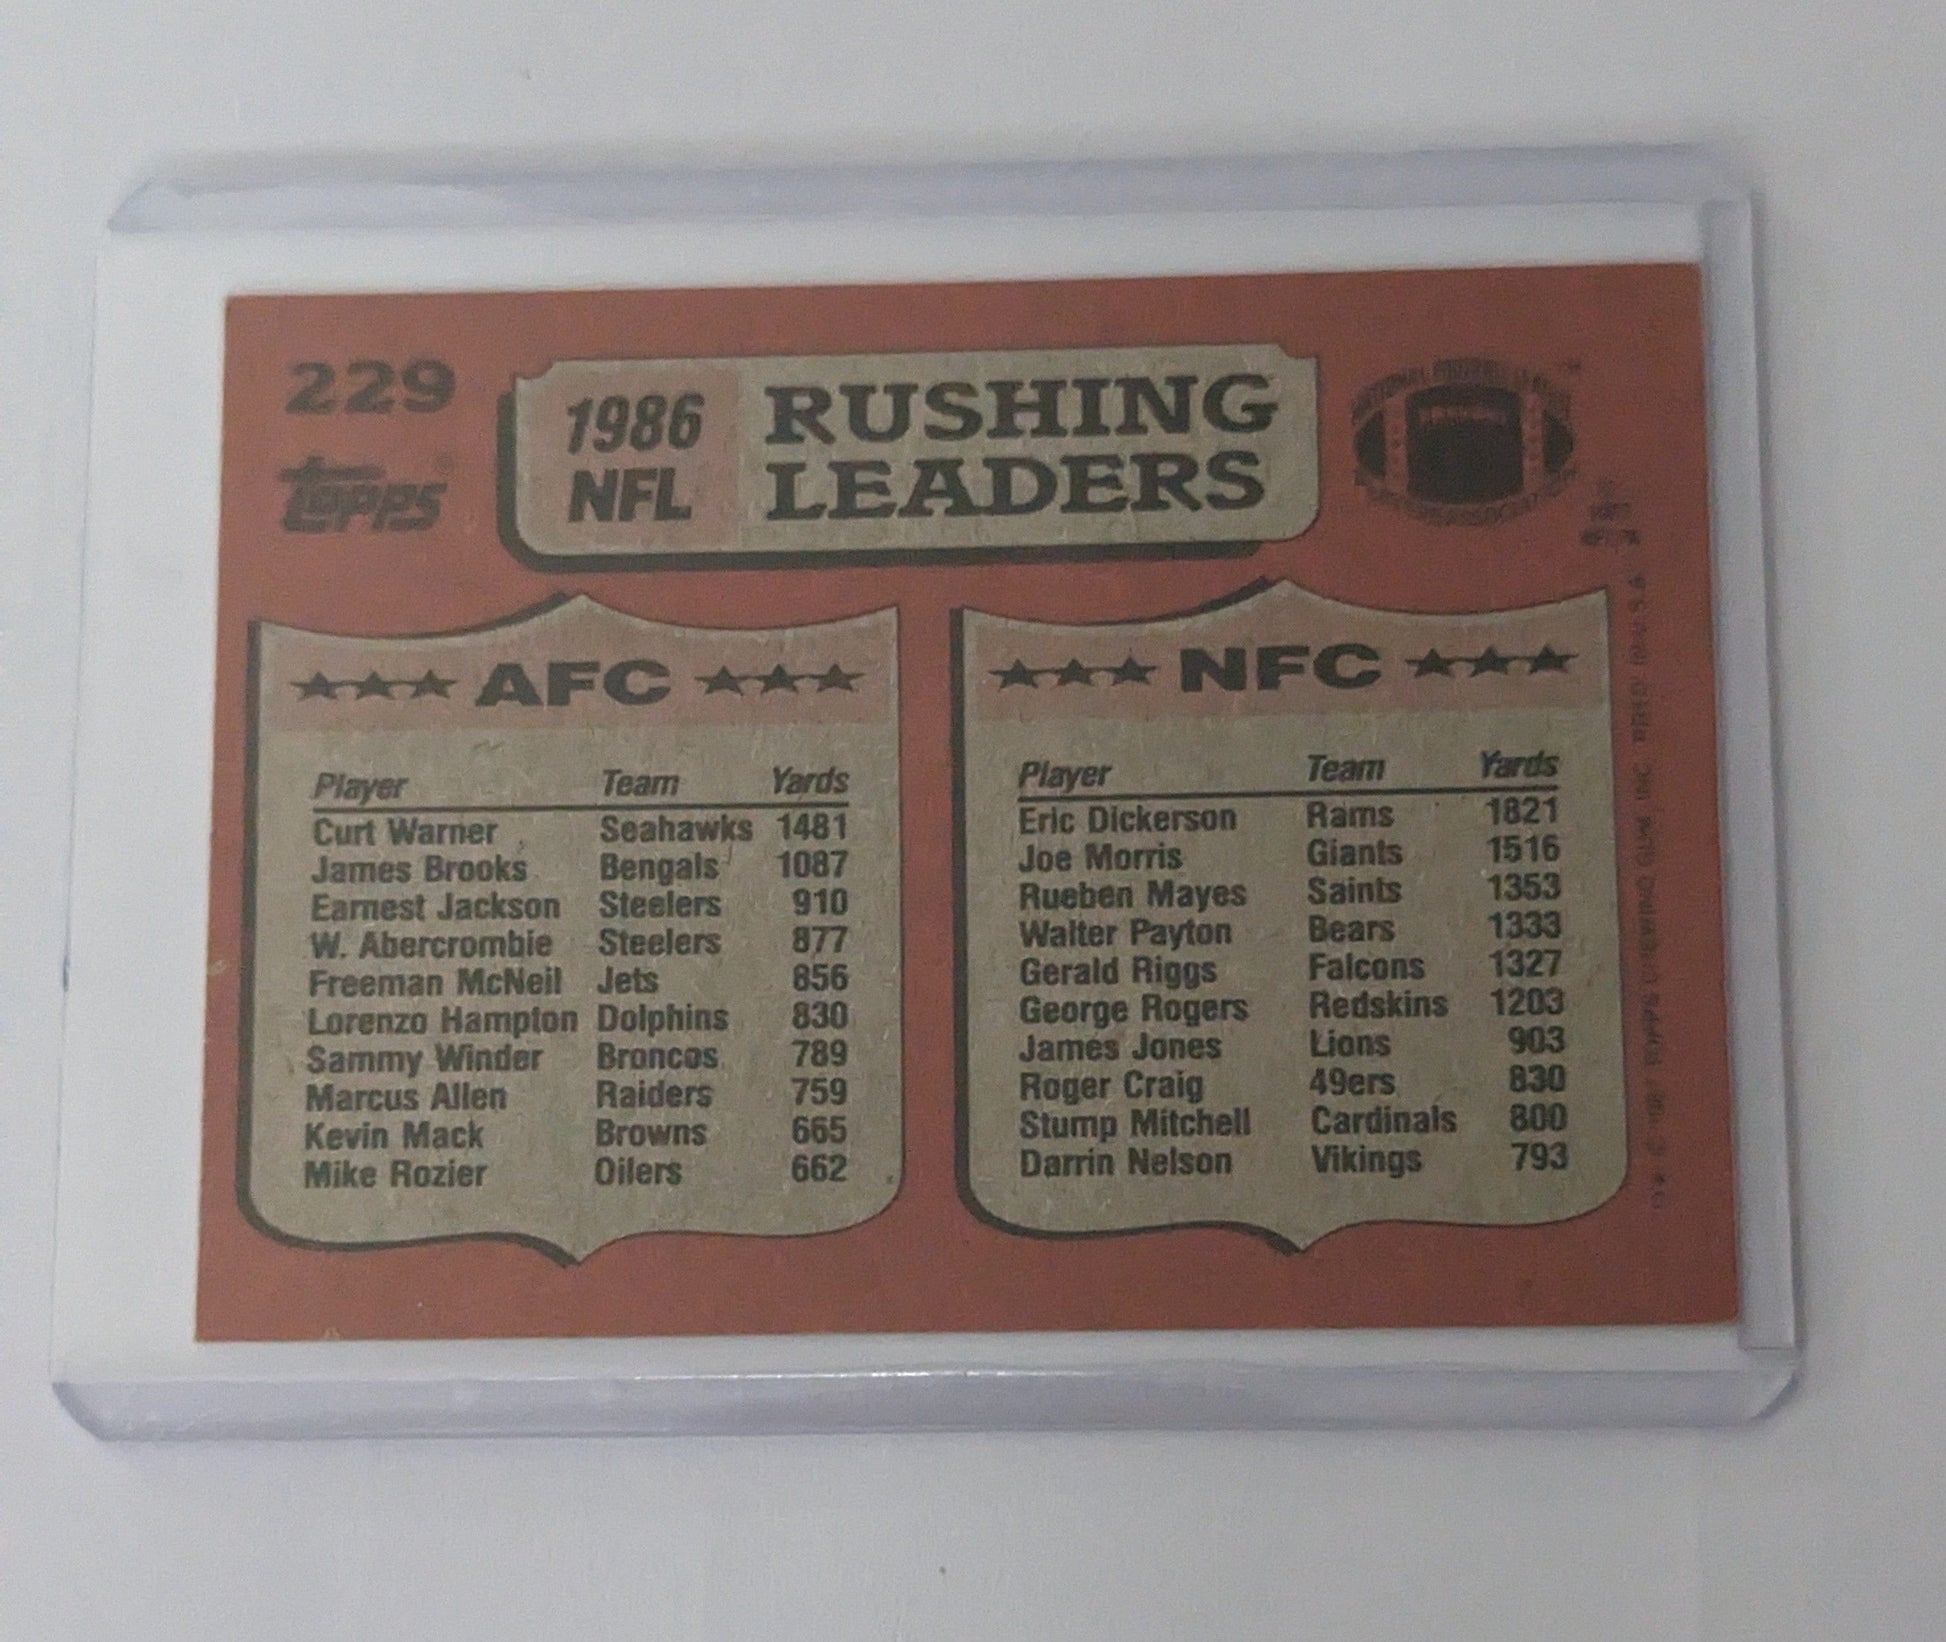 FIINR Football Card Eric Dickerson & Curt Warner 1988 Topps Rushing Leaders Card #229